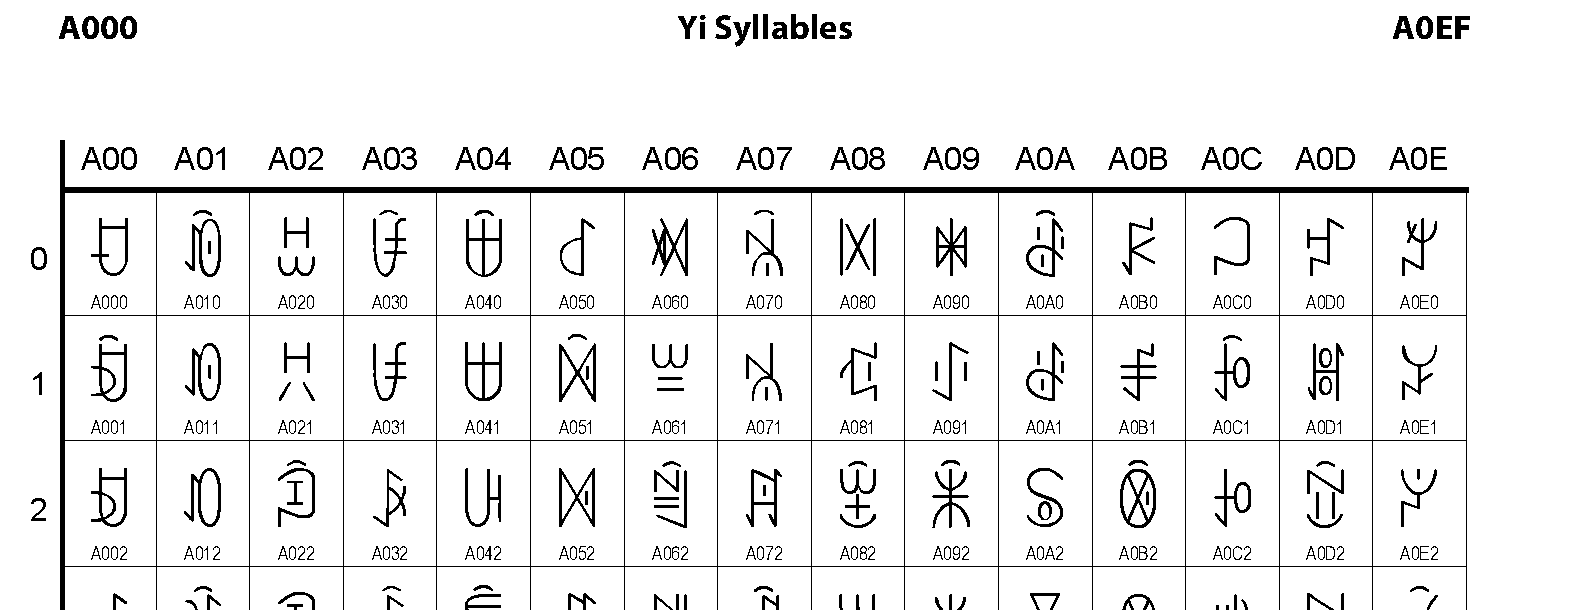 Unicode - Yi Syllables